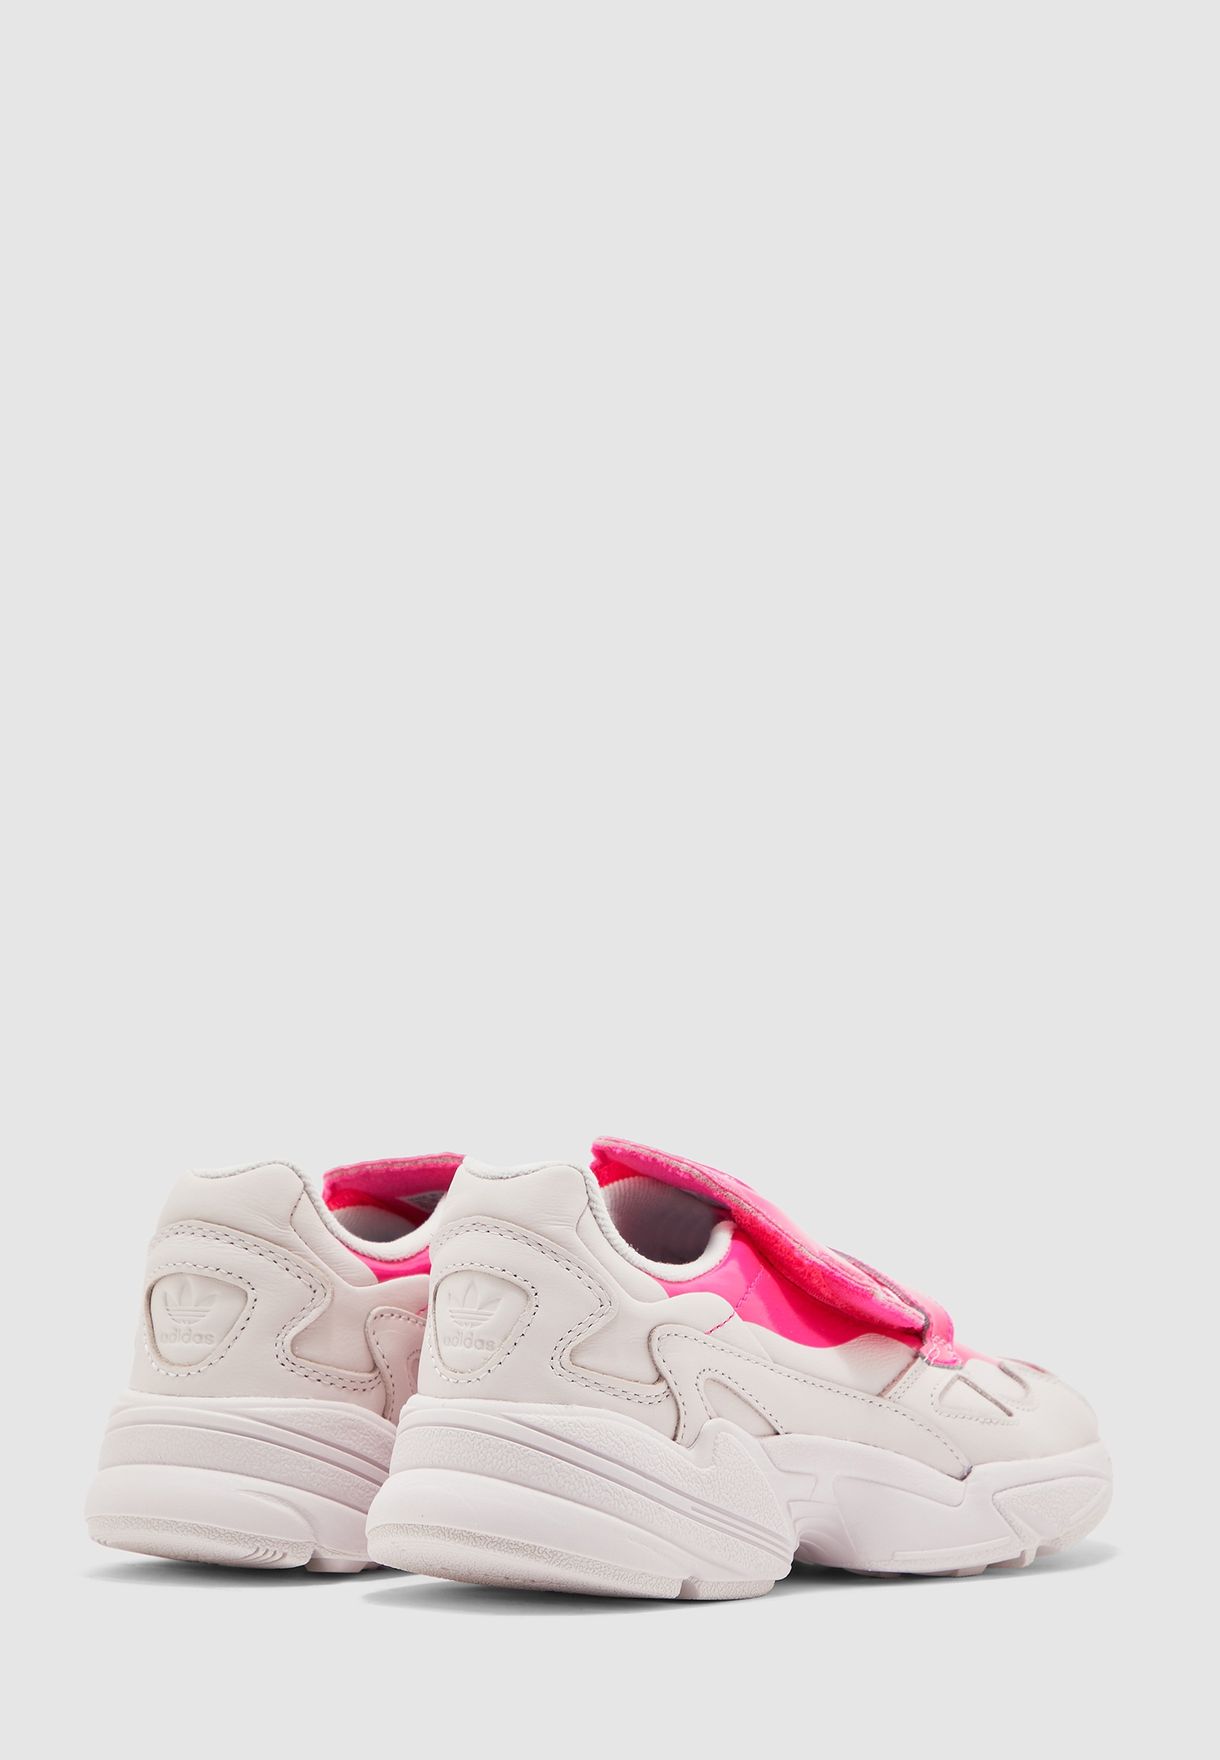 adidas originals falcon trainer in black and pink